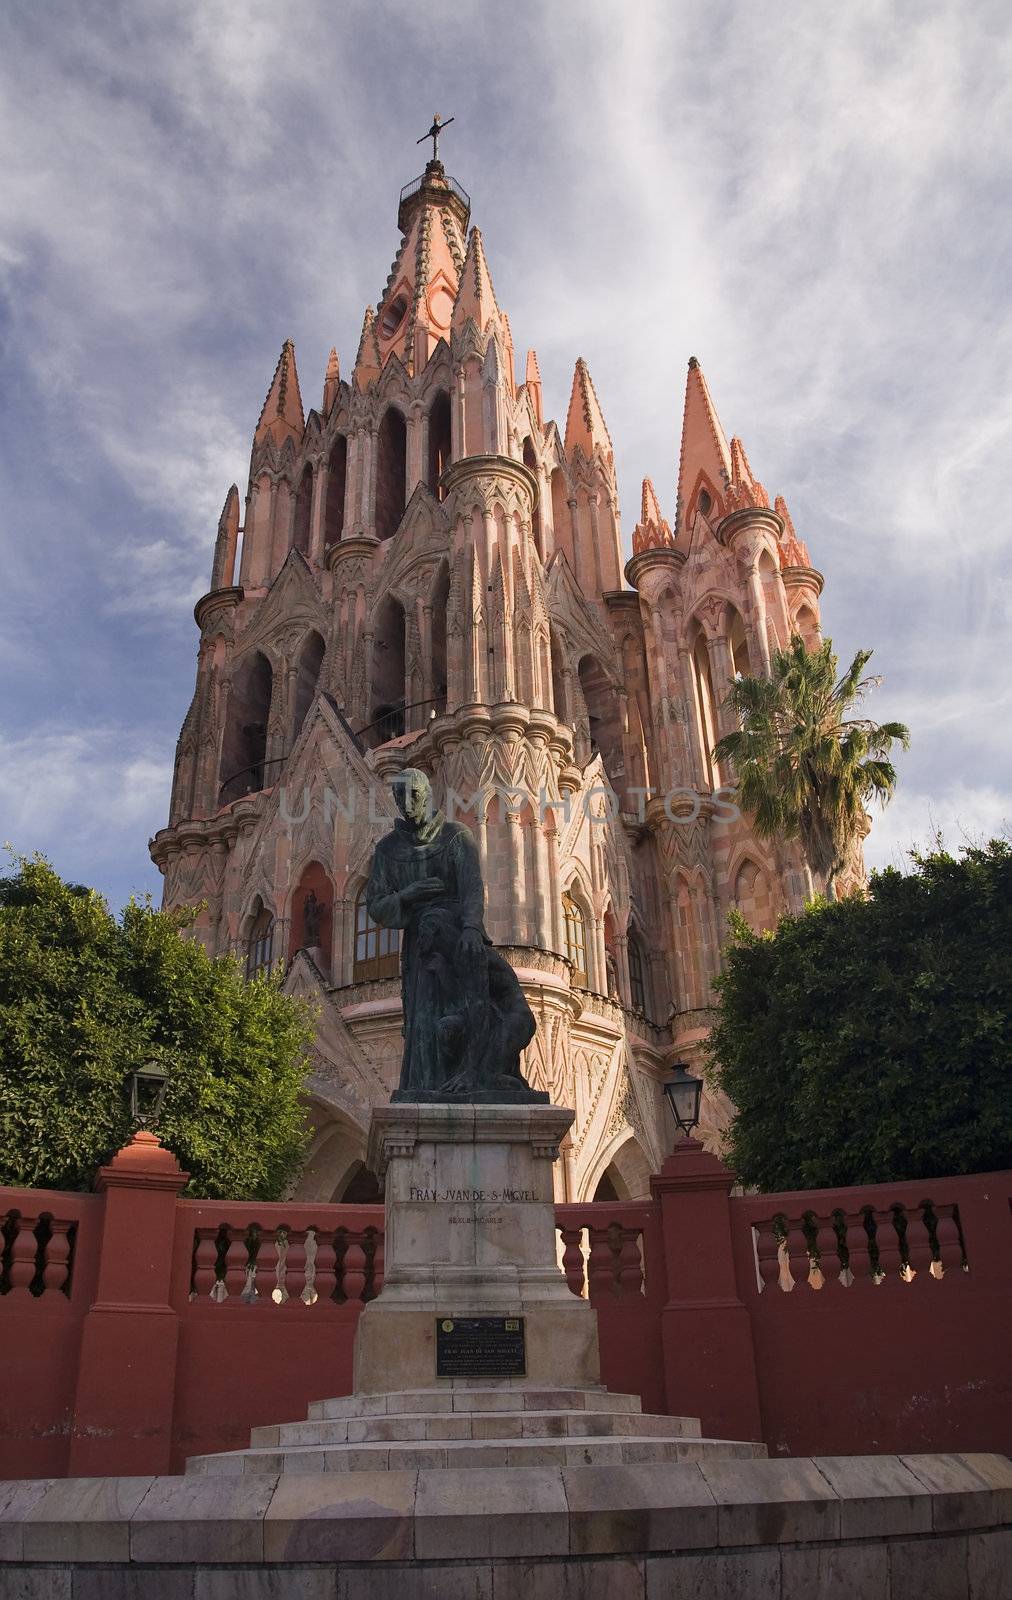 Statue Friar Juan San Miguel Parroquia Archangel Church San Miguel de Allende Mexico by bill_perry